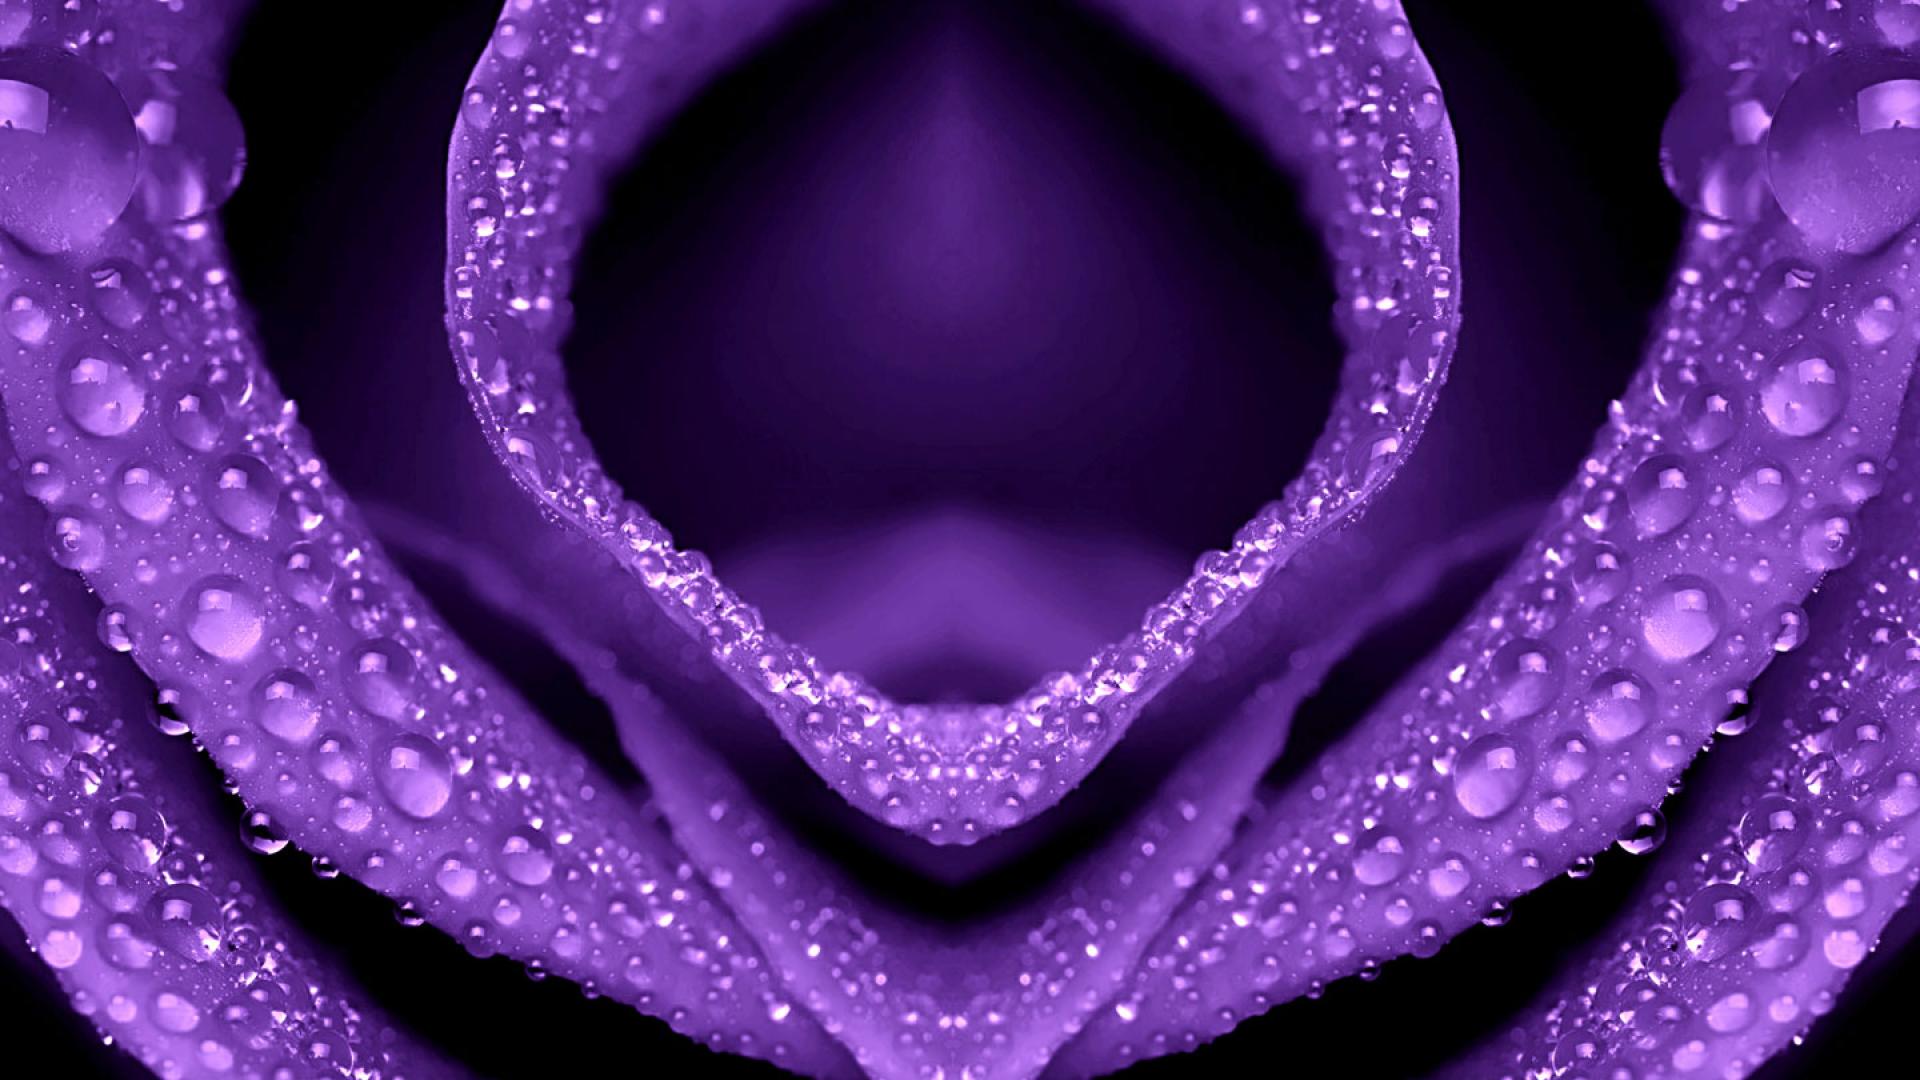 HD Wallpapers 1080p Purple Rose